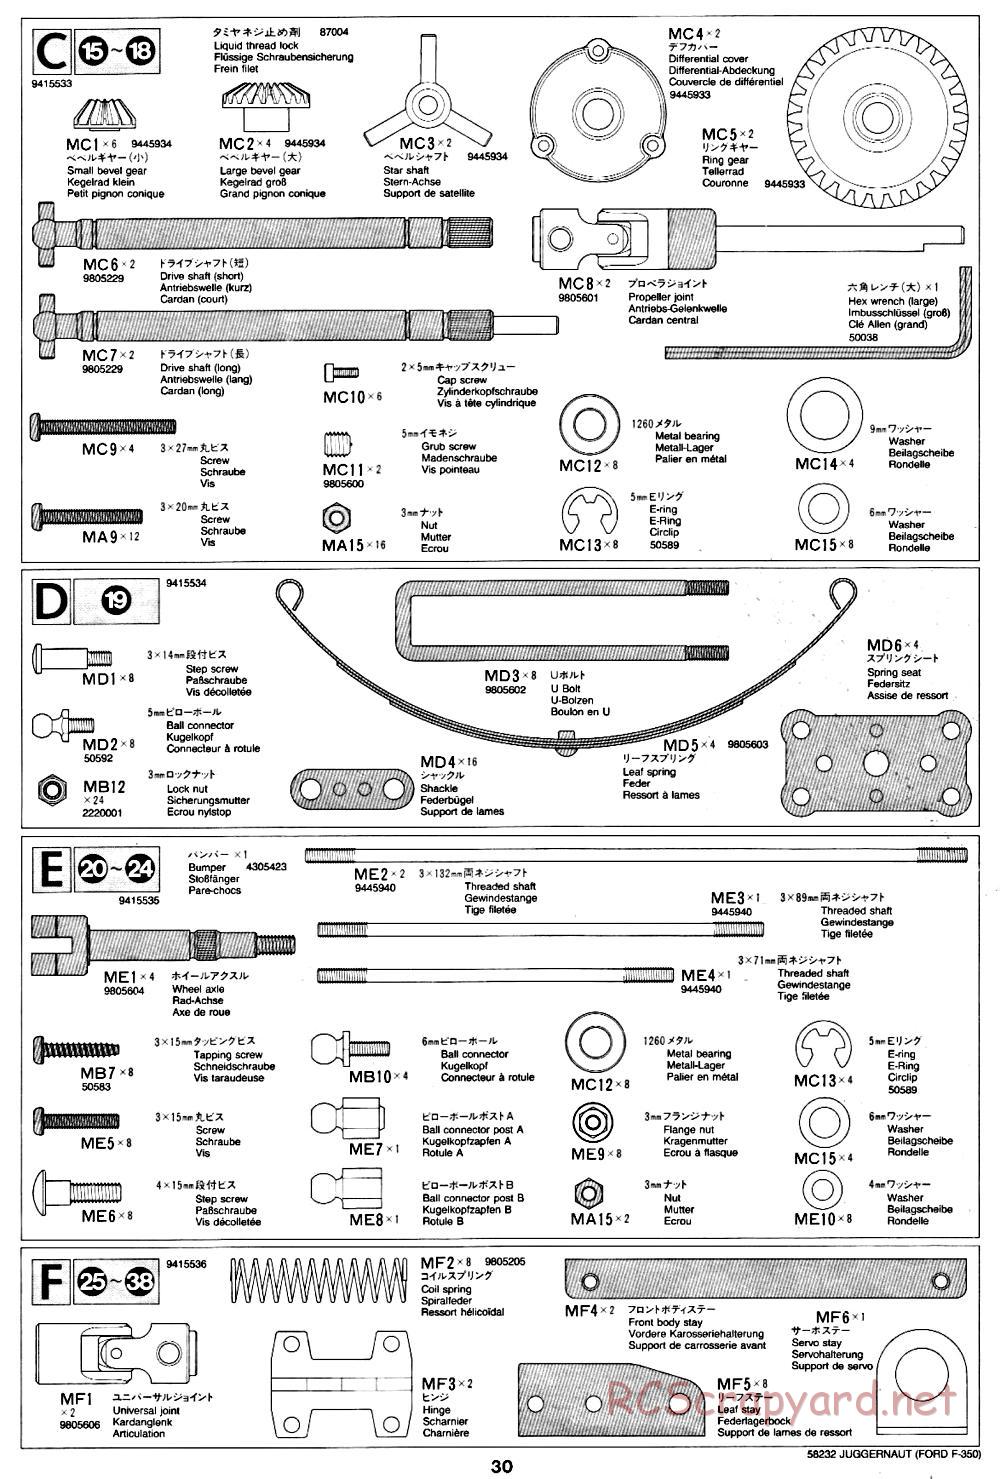 Tamiya - Juggernaut Chassis - Manual - Page 30